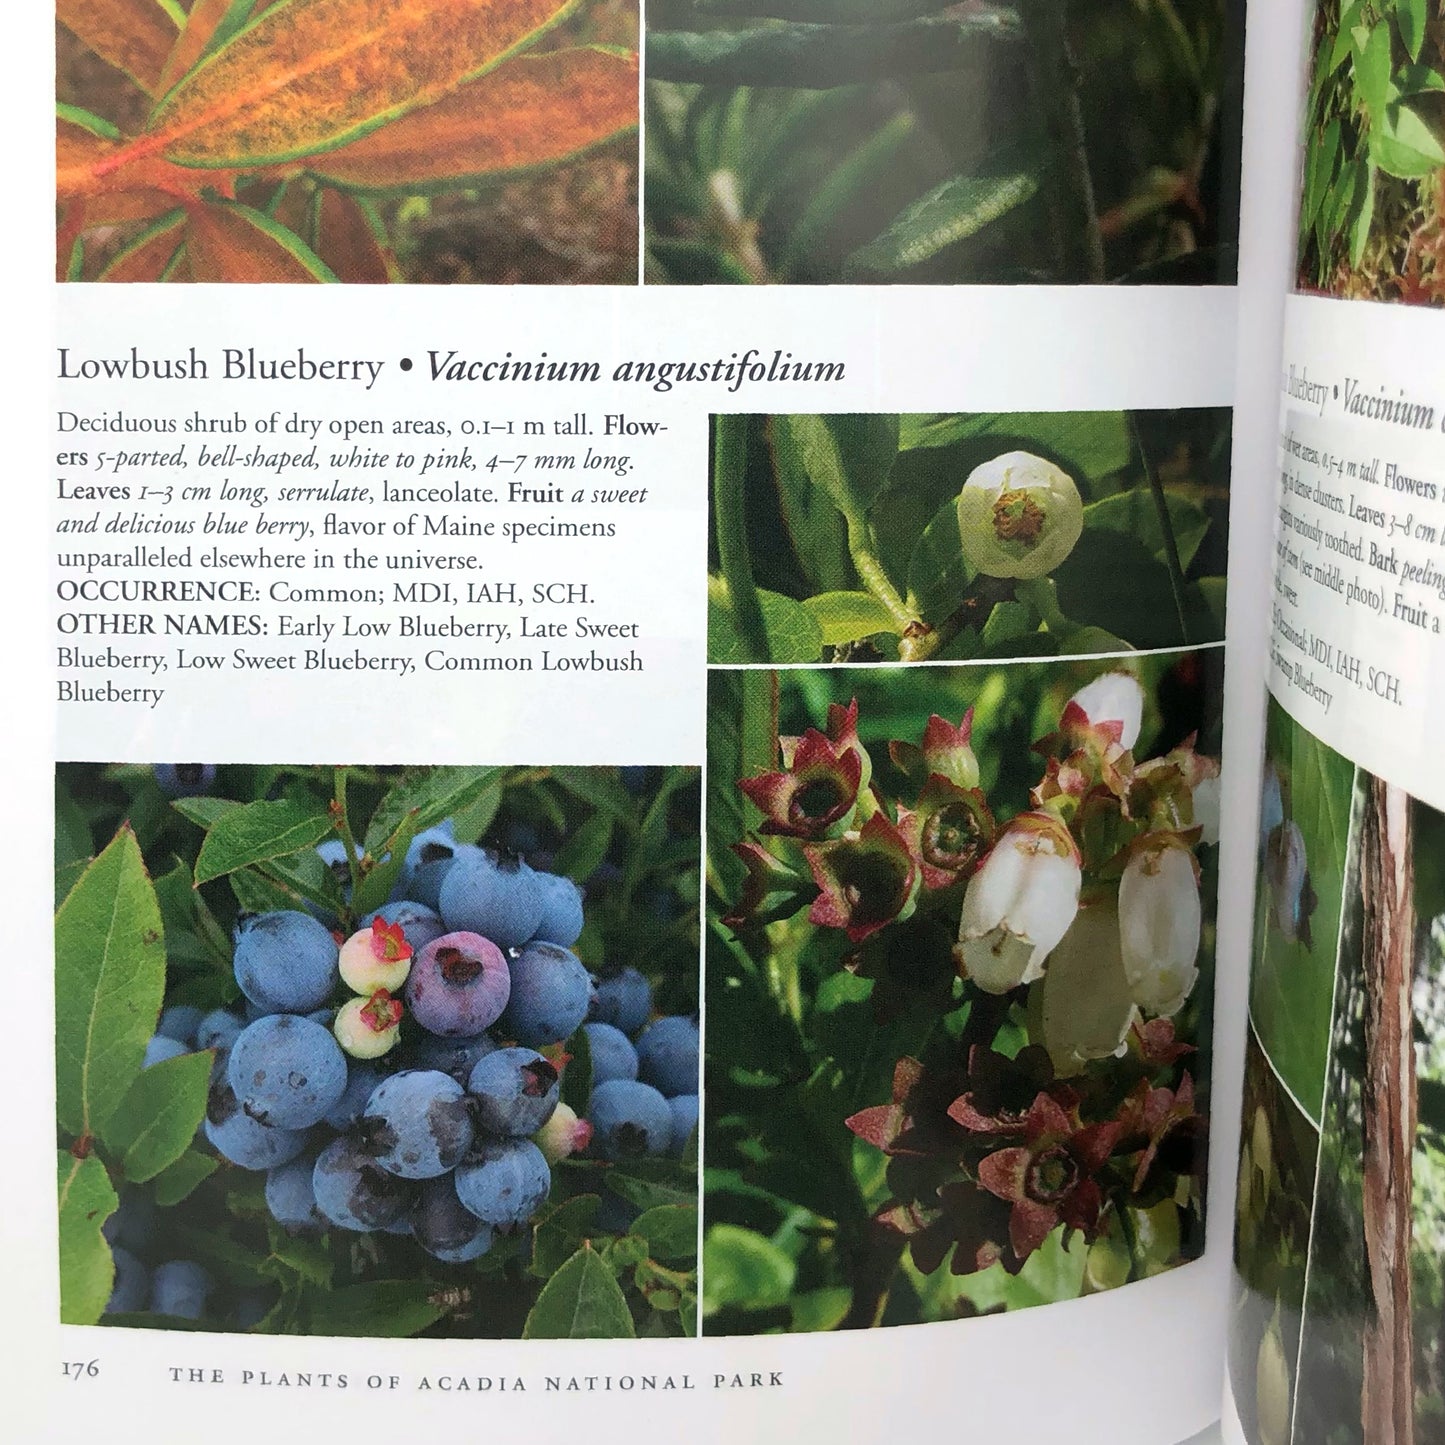 The Plants of Acadia National Park - Glen H. Mittelhauser, Linda L. Gregory, Sally C. Rooney, and Jill E. Weber (paperback)